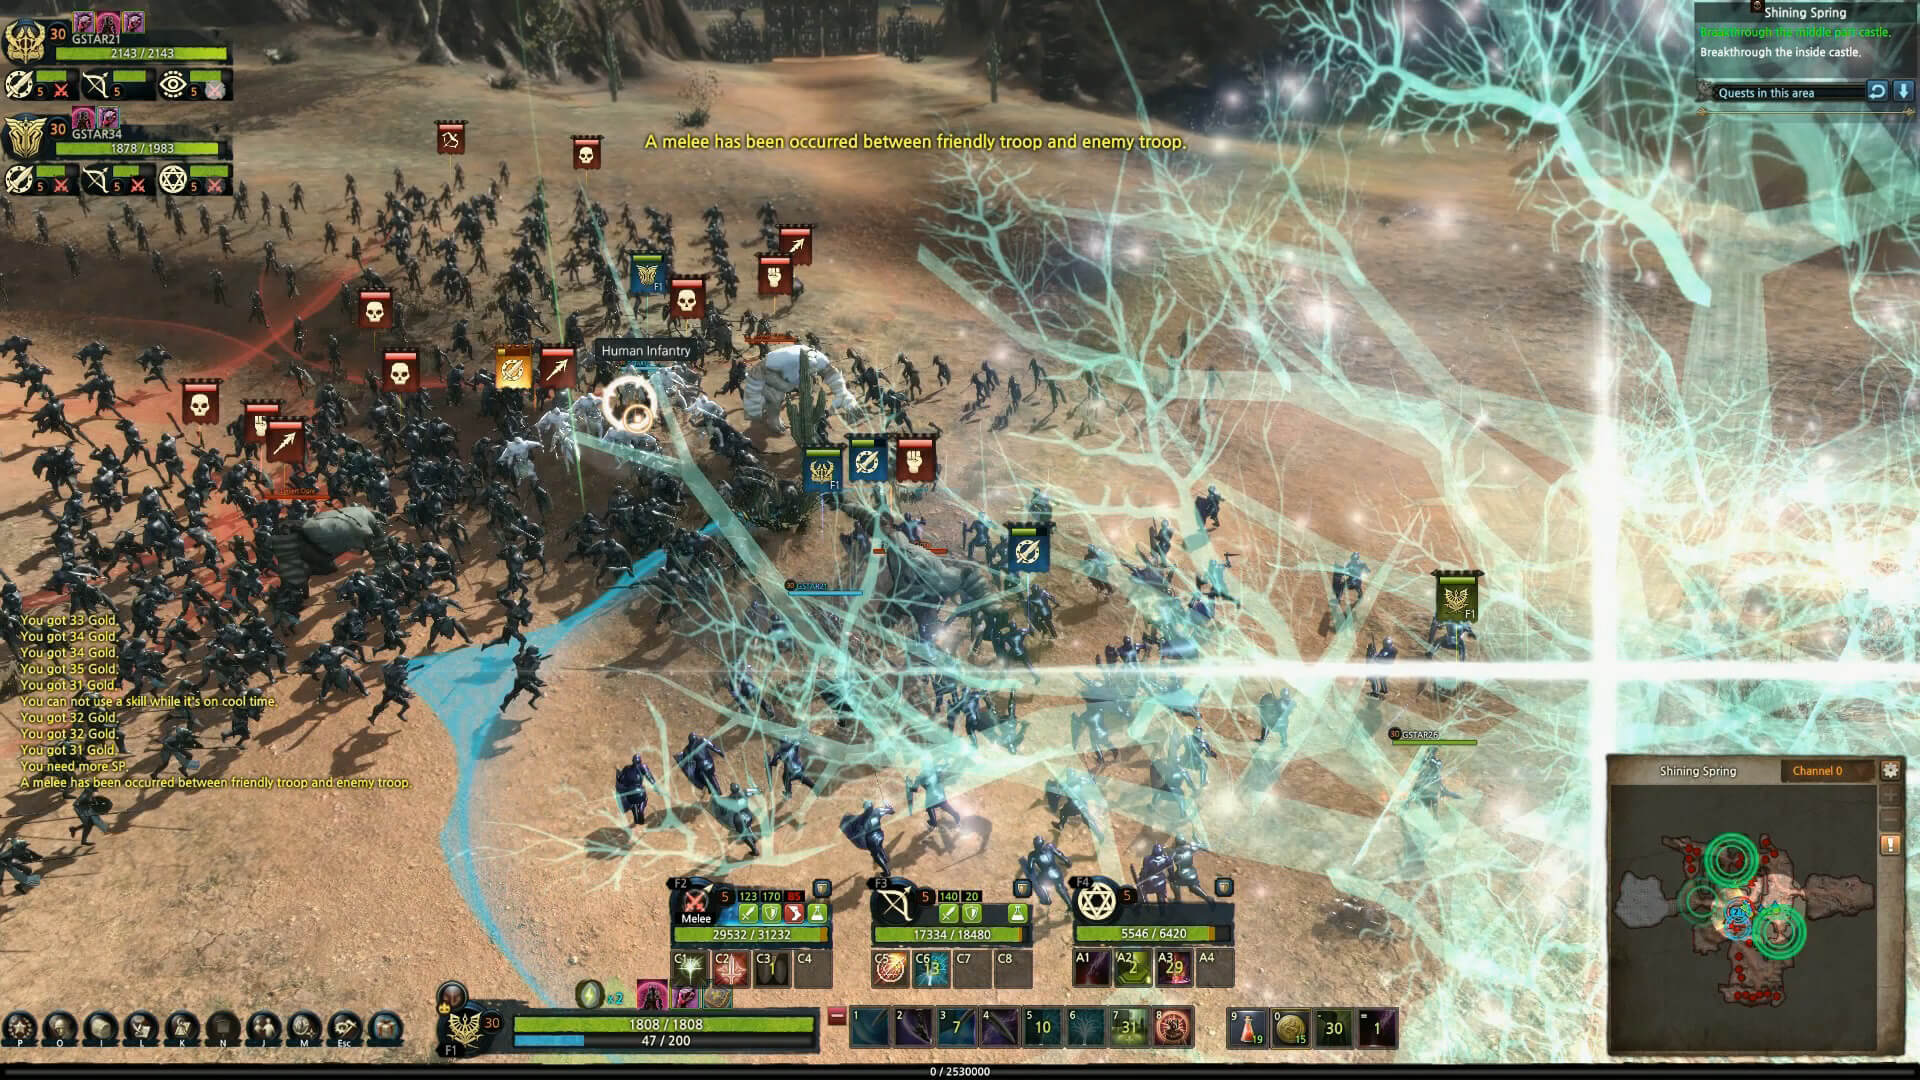 Kingdom Under Fire 2 скриншот (фото)